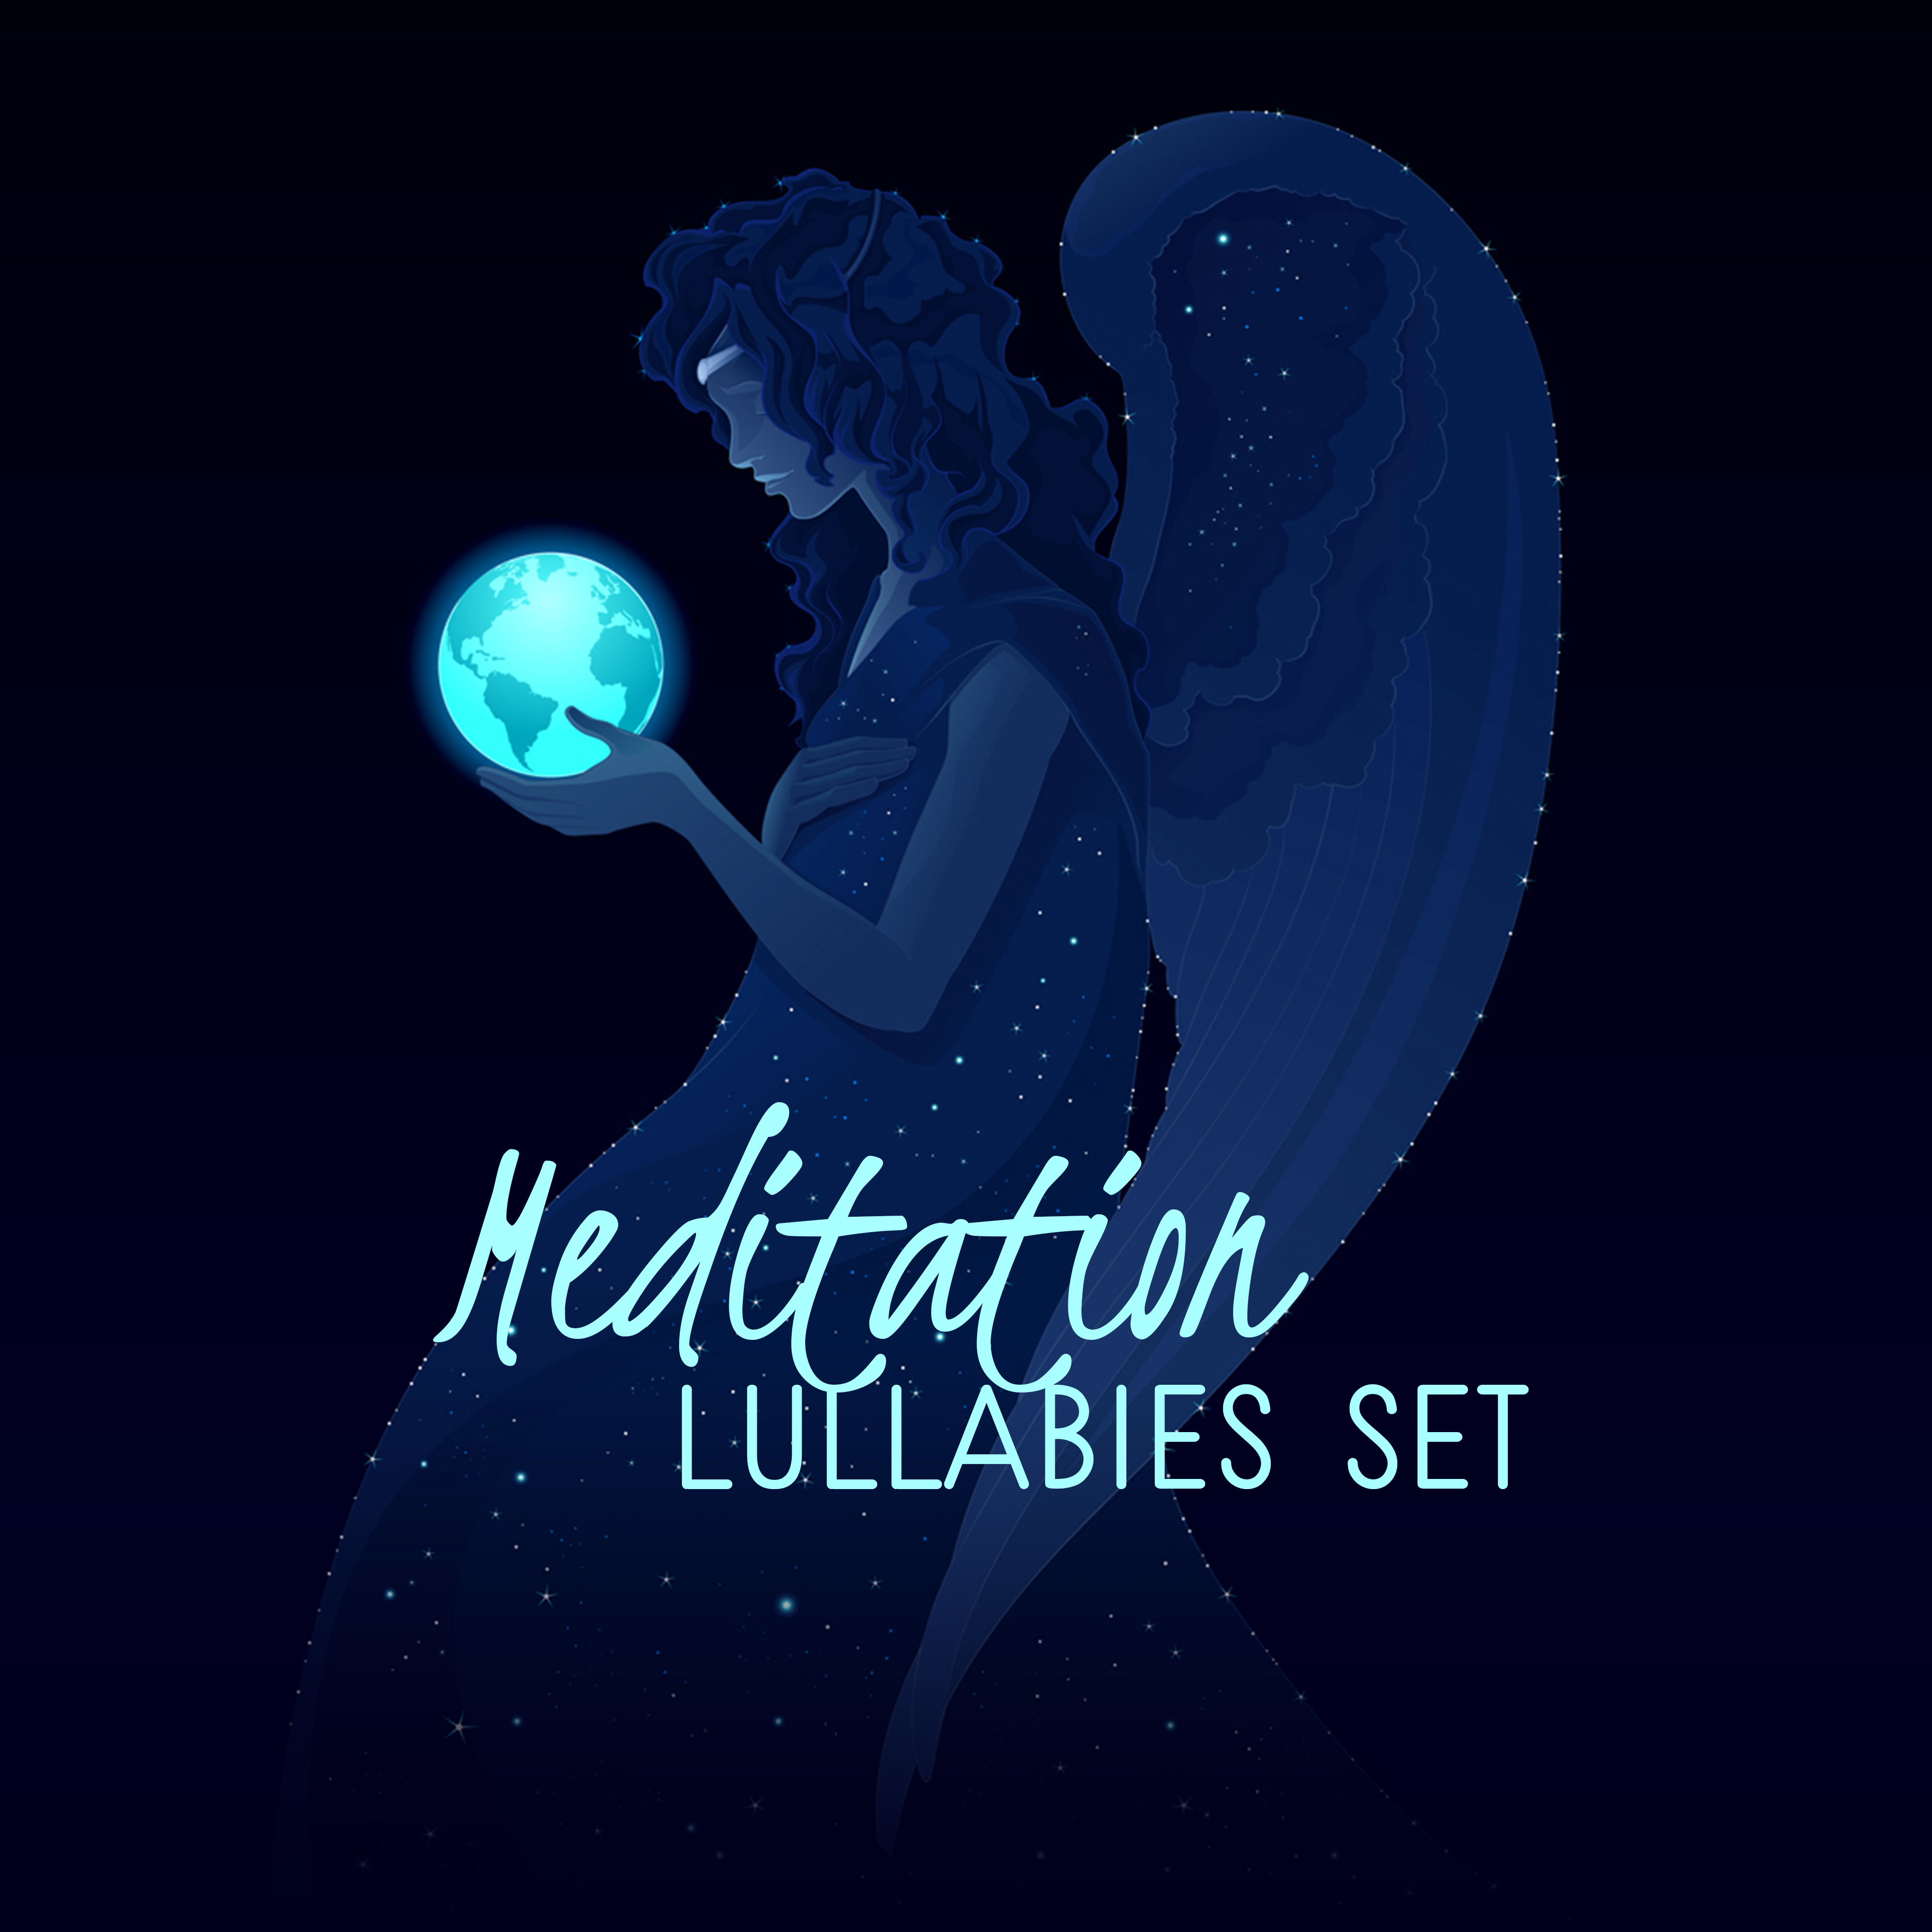 Meditation Lullabies Set